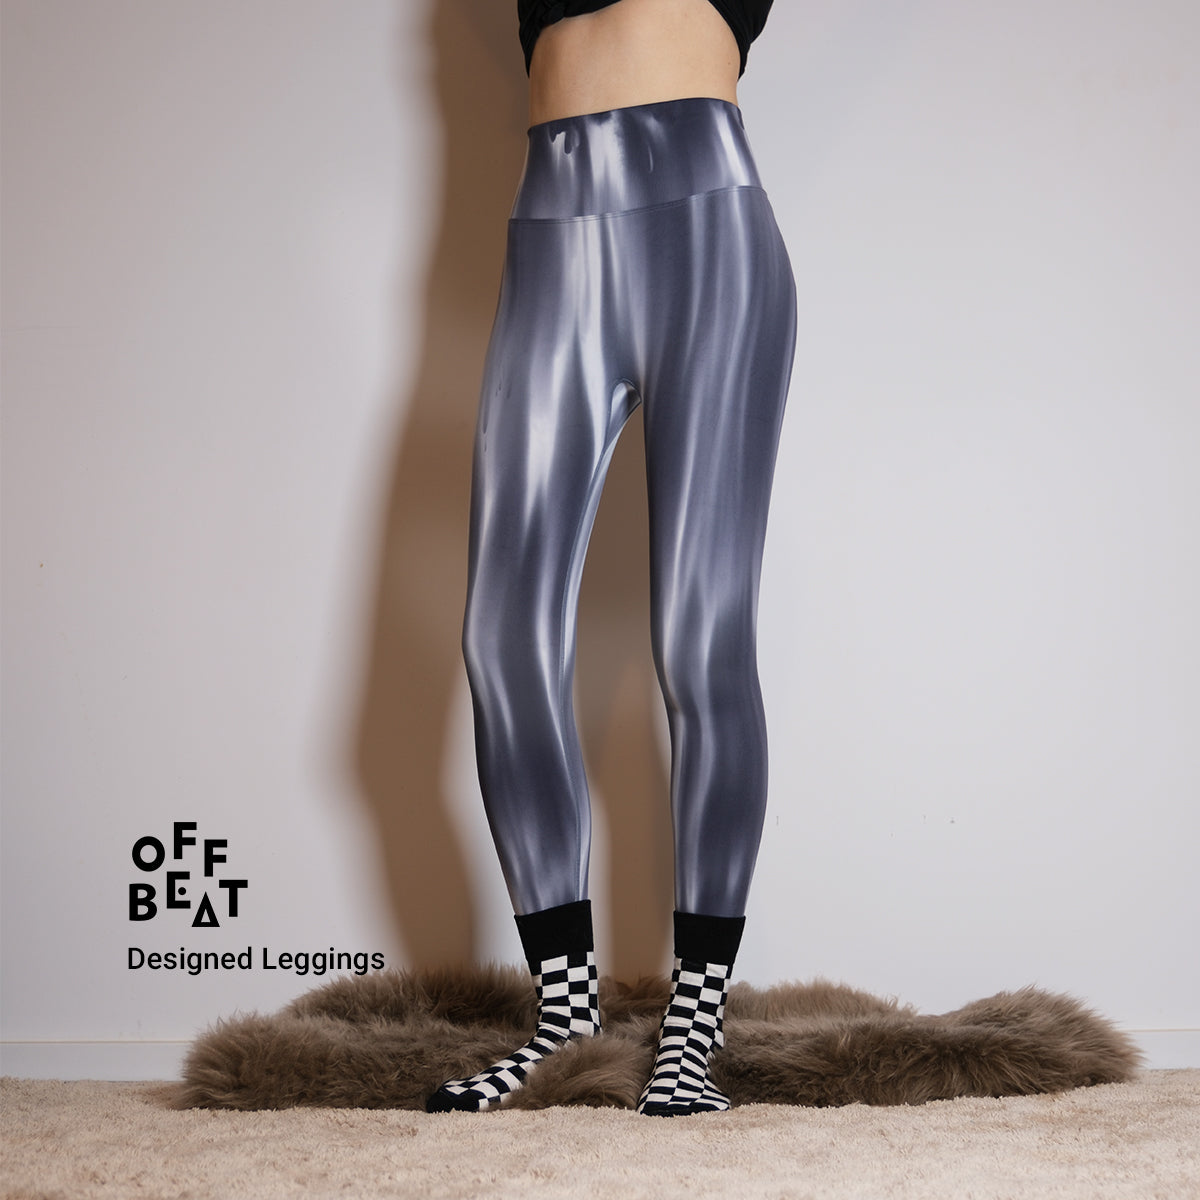 Sport/Yoga designed leggings from Offbeat, grey spectrum